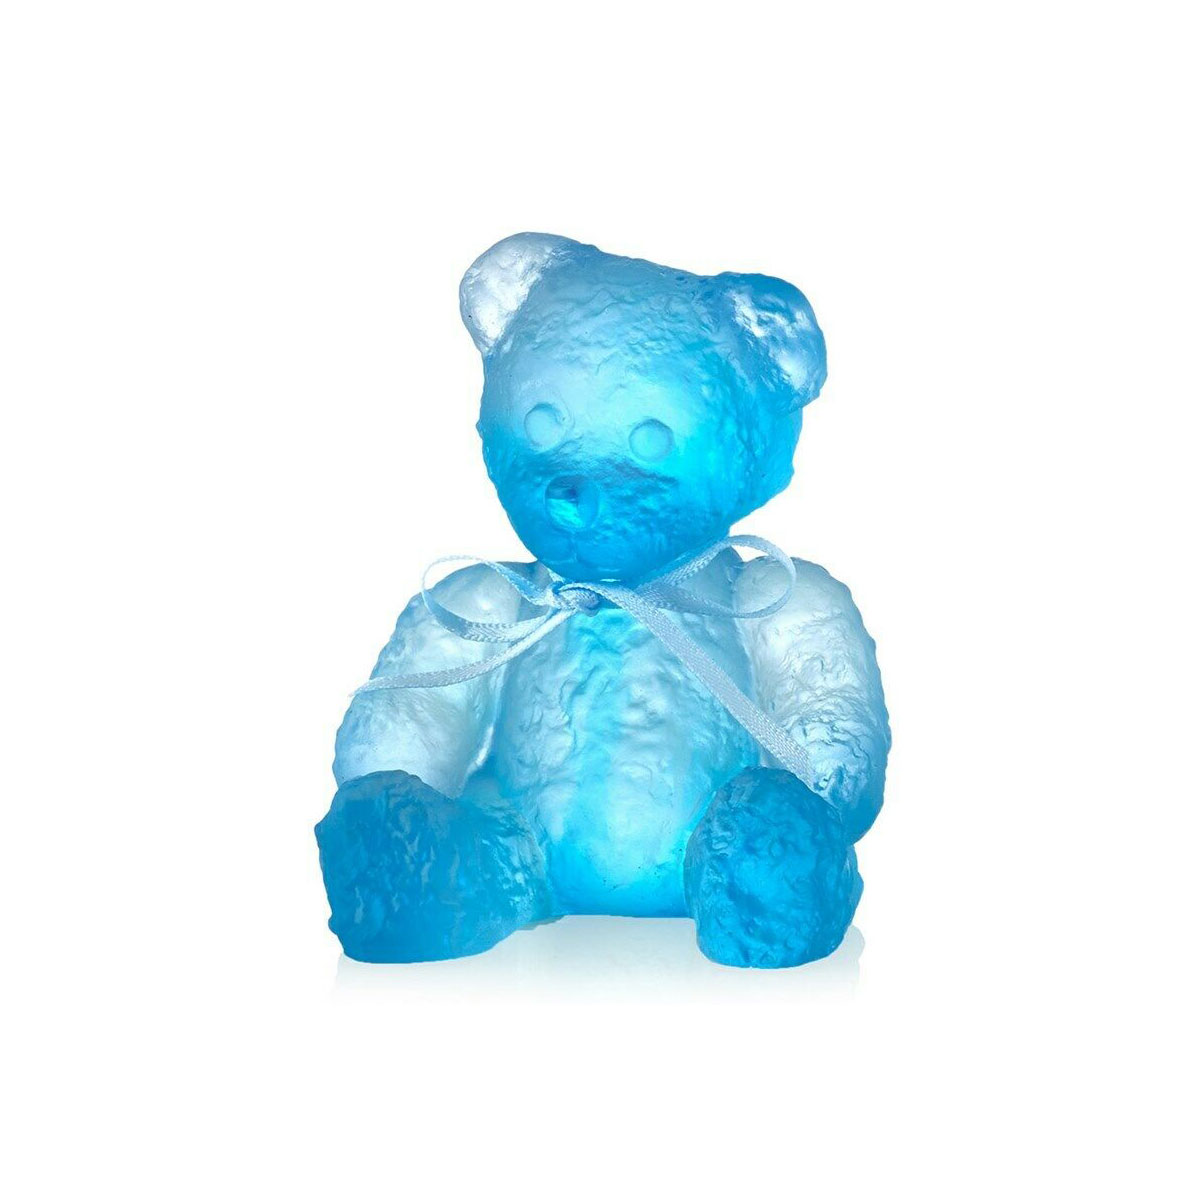 Daum Blue Mini-Doudours, Teddy Bear by Serge Mansau Sculpture